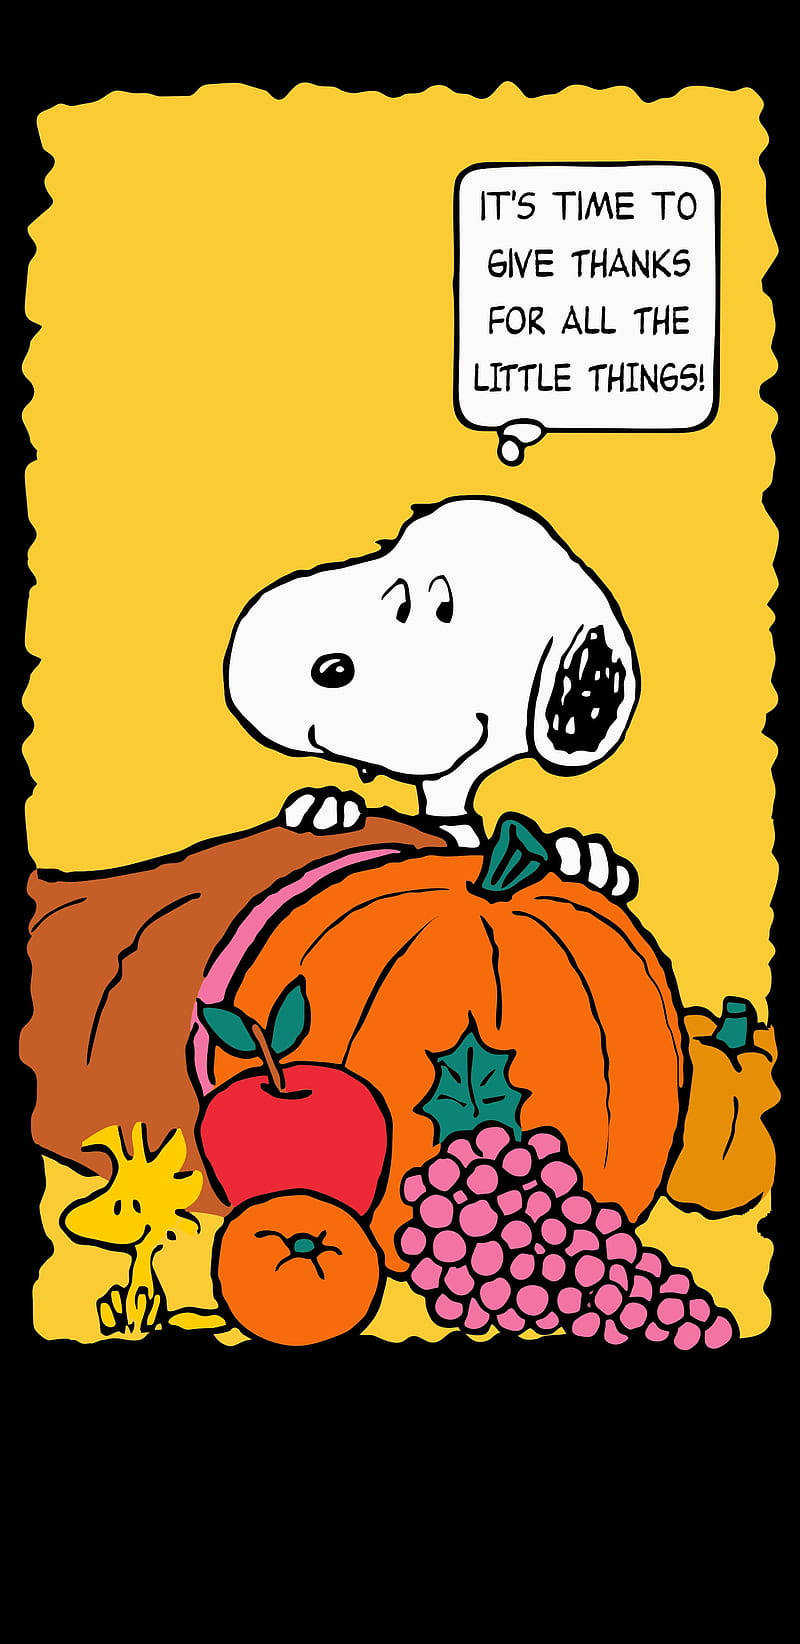 Peanuts Thanksgiving Comic Panel Wallpaper